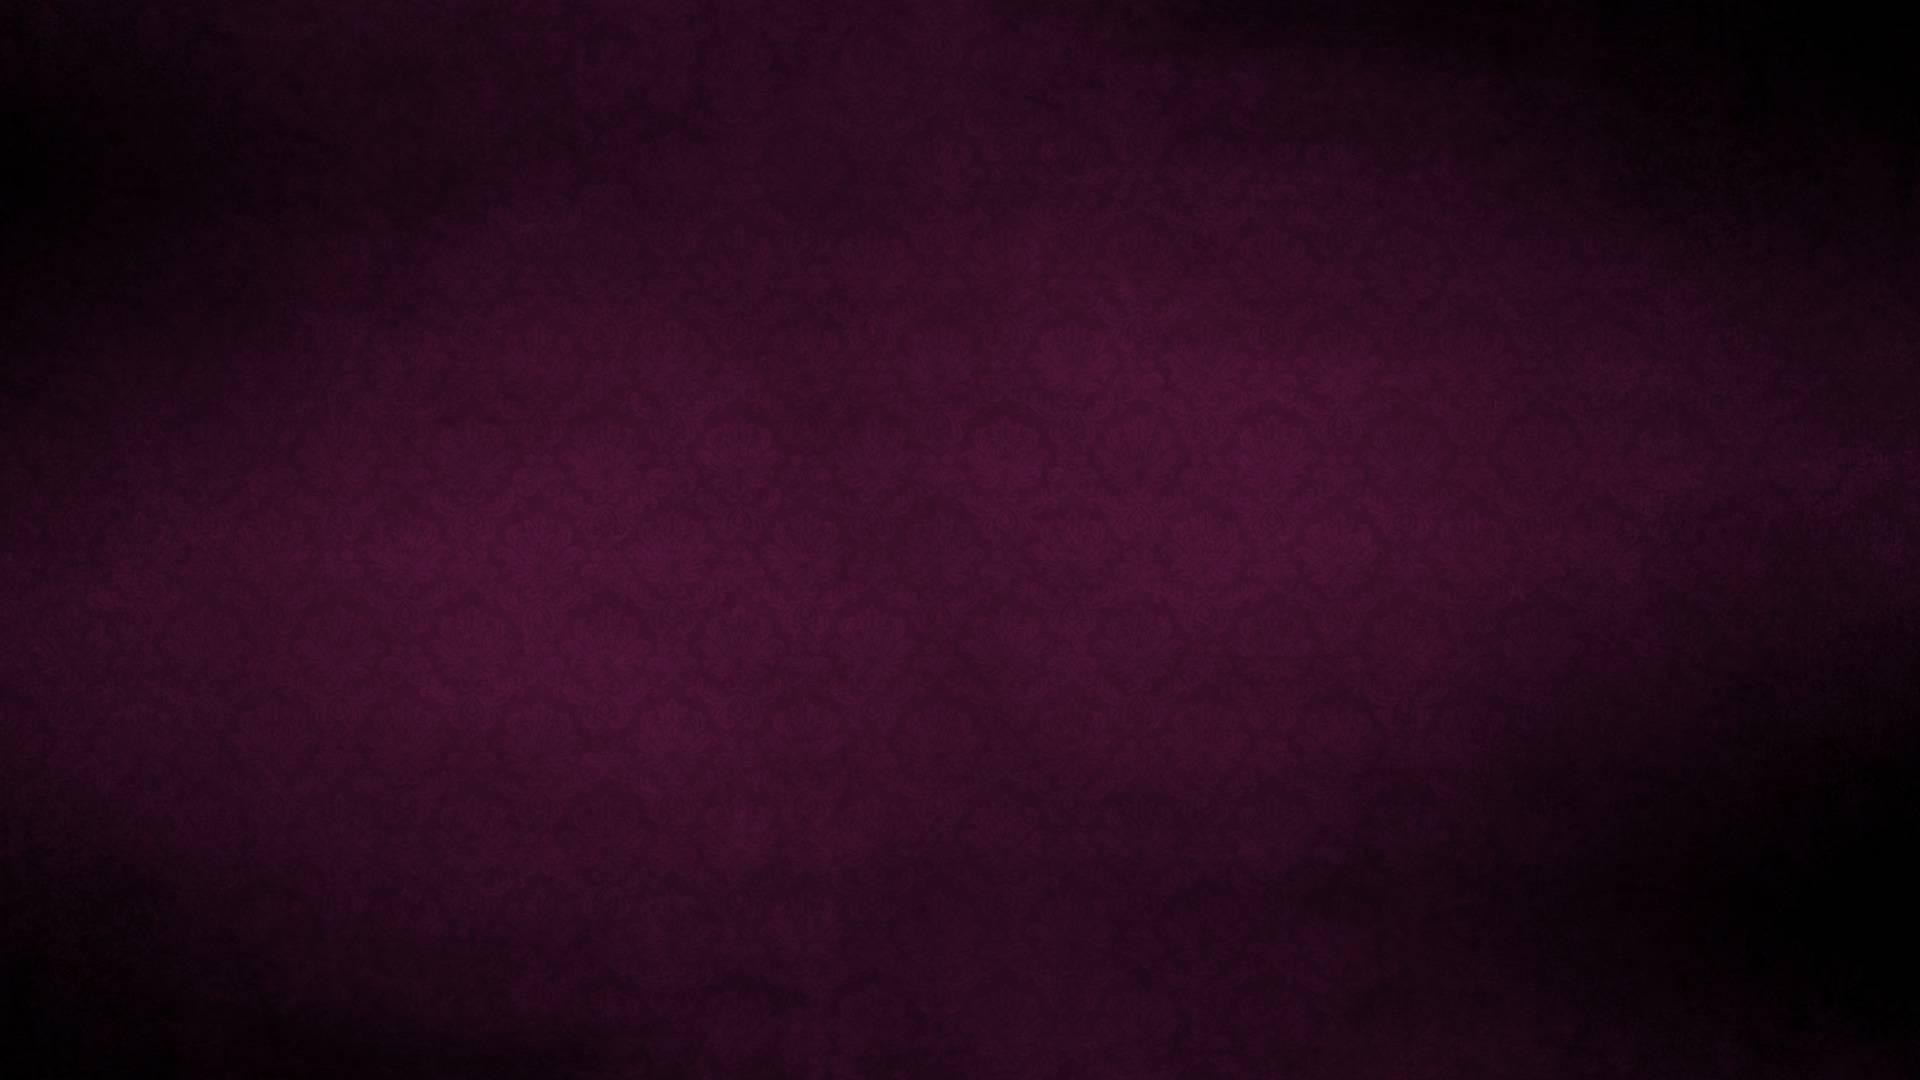 Violet Colour Wallpaper, High Definition, High Quality